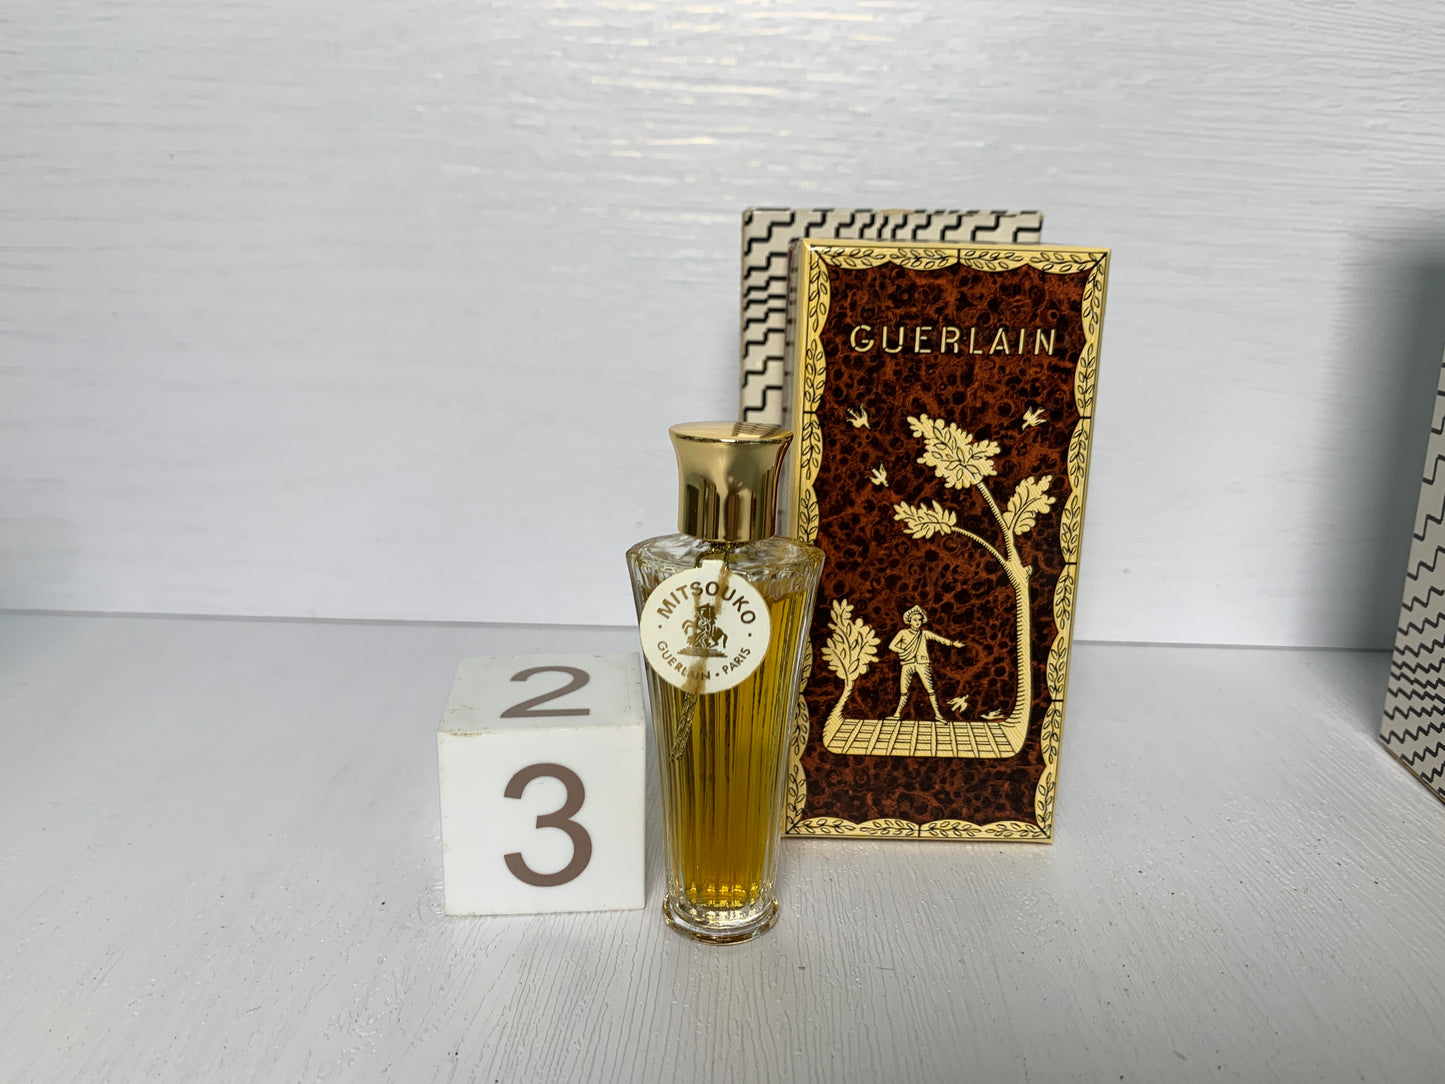 嬌蘭 mitsouko 7.5ml parfum 香水 - 9NOV